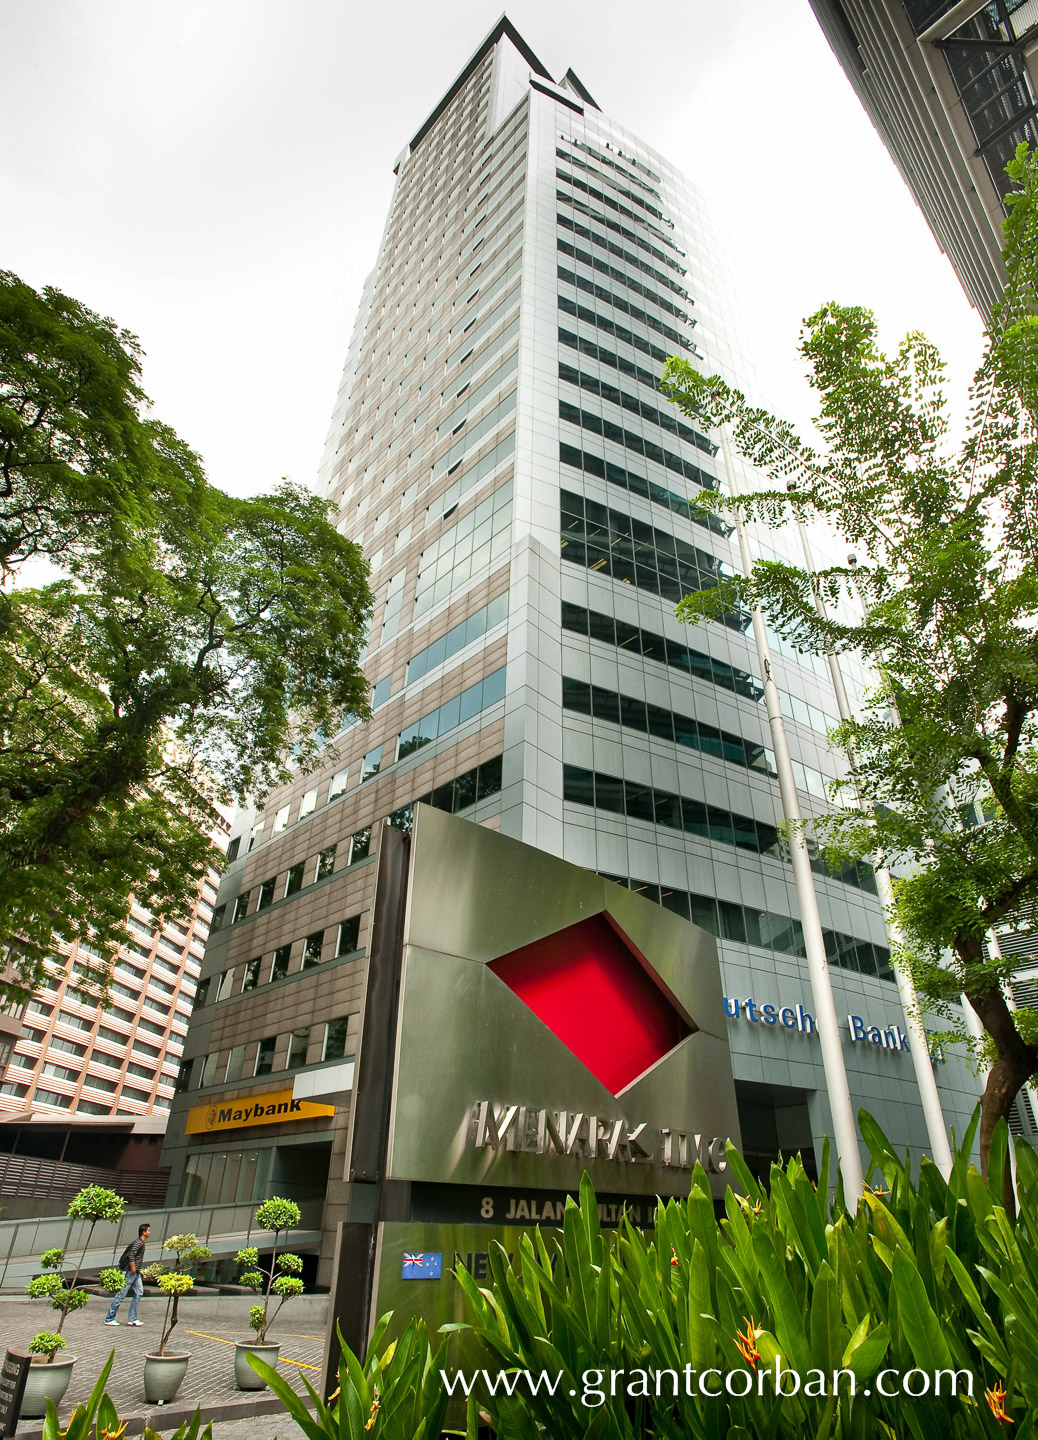 1MDB HQ Malaysia Strategic Investment Company